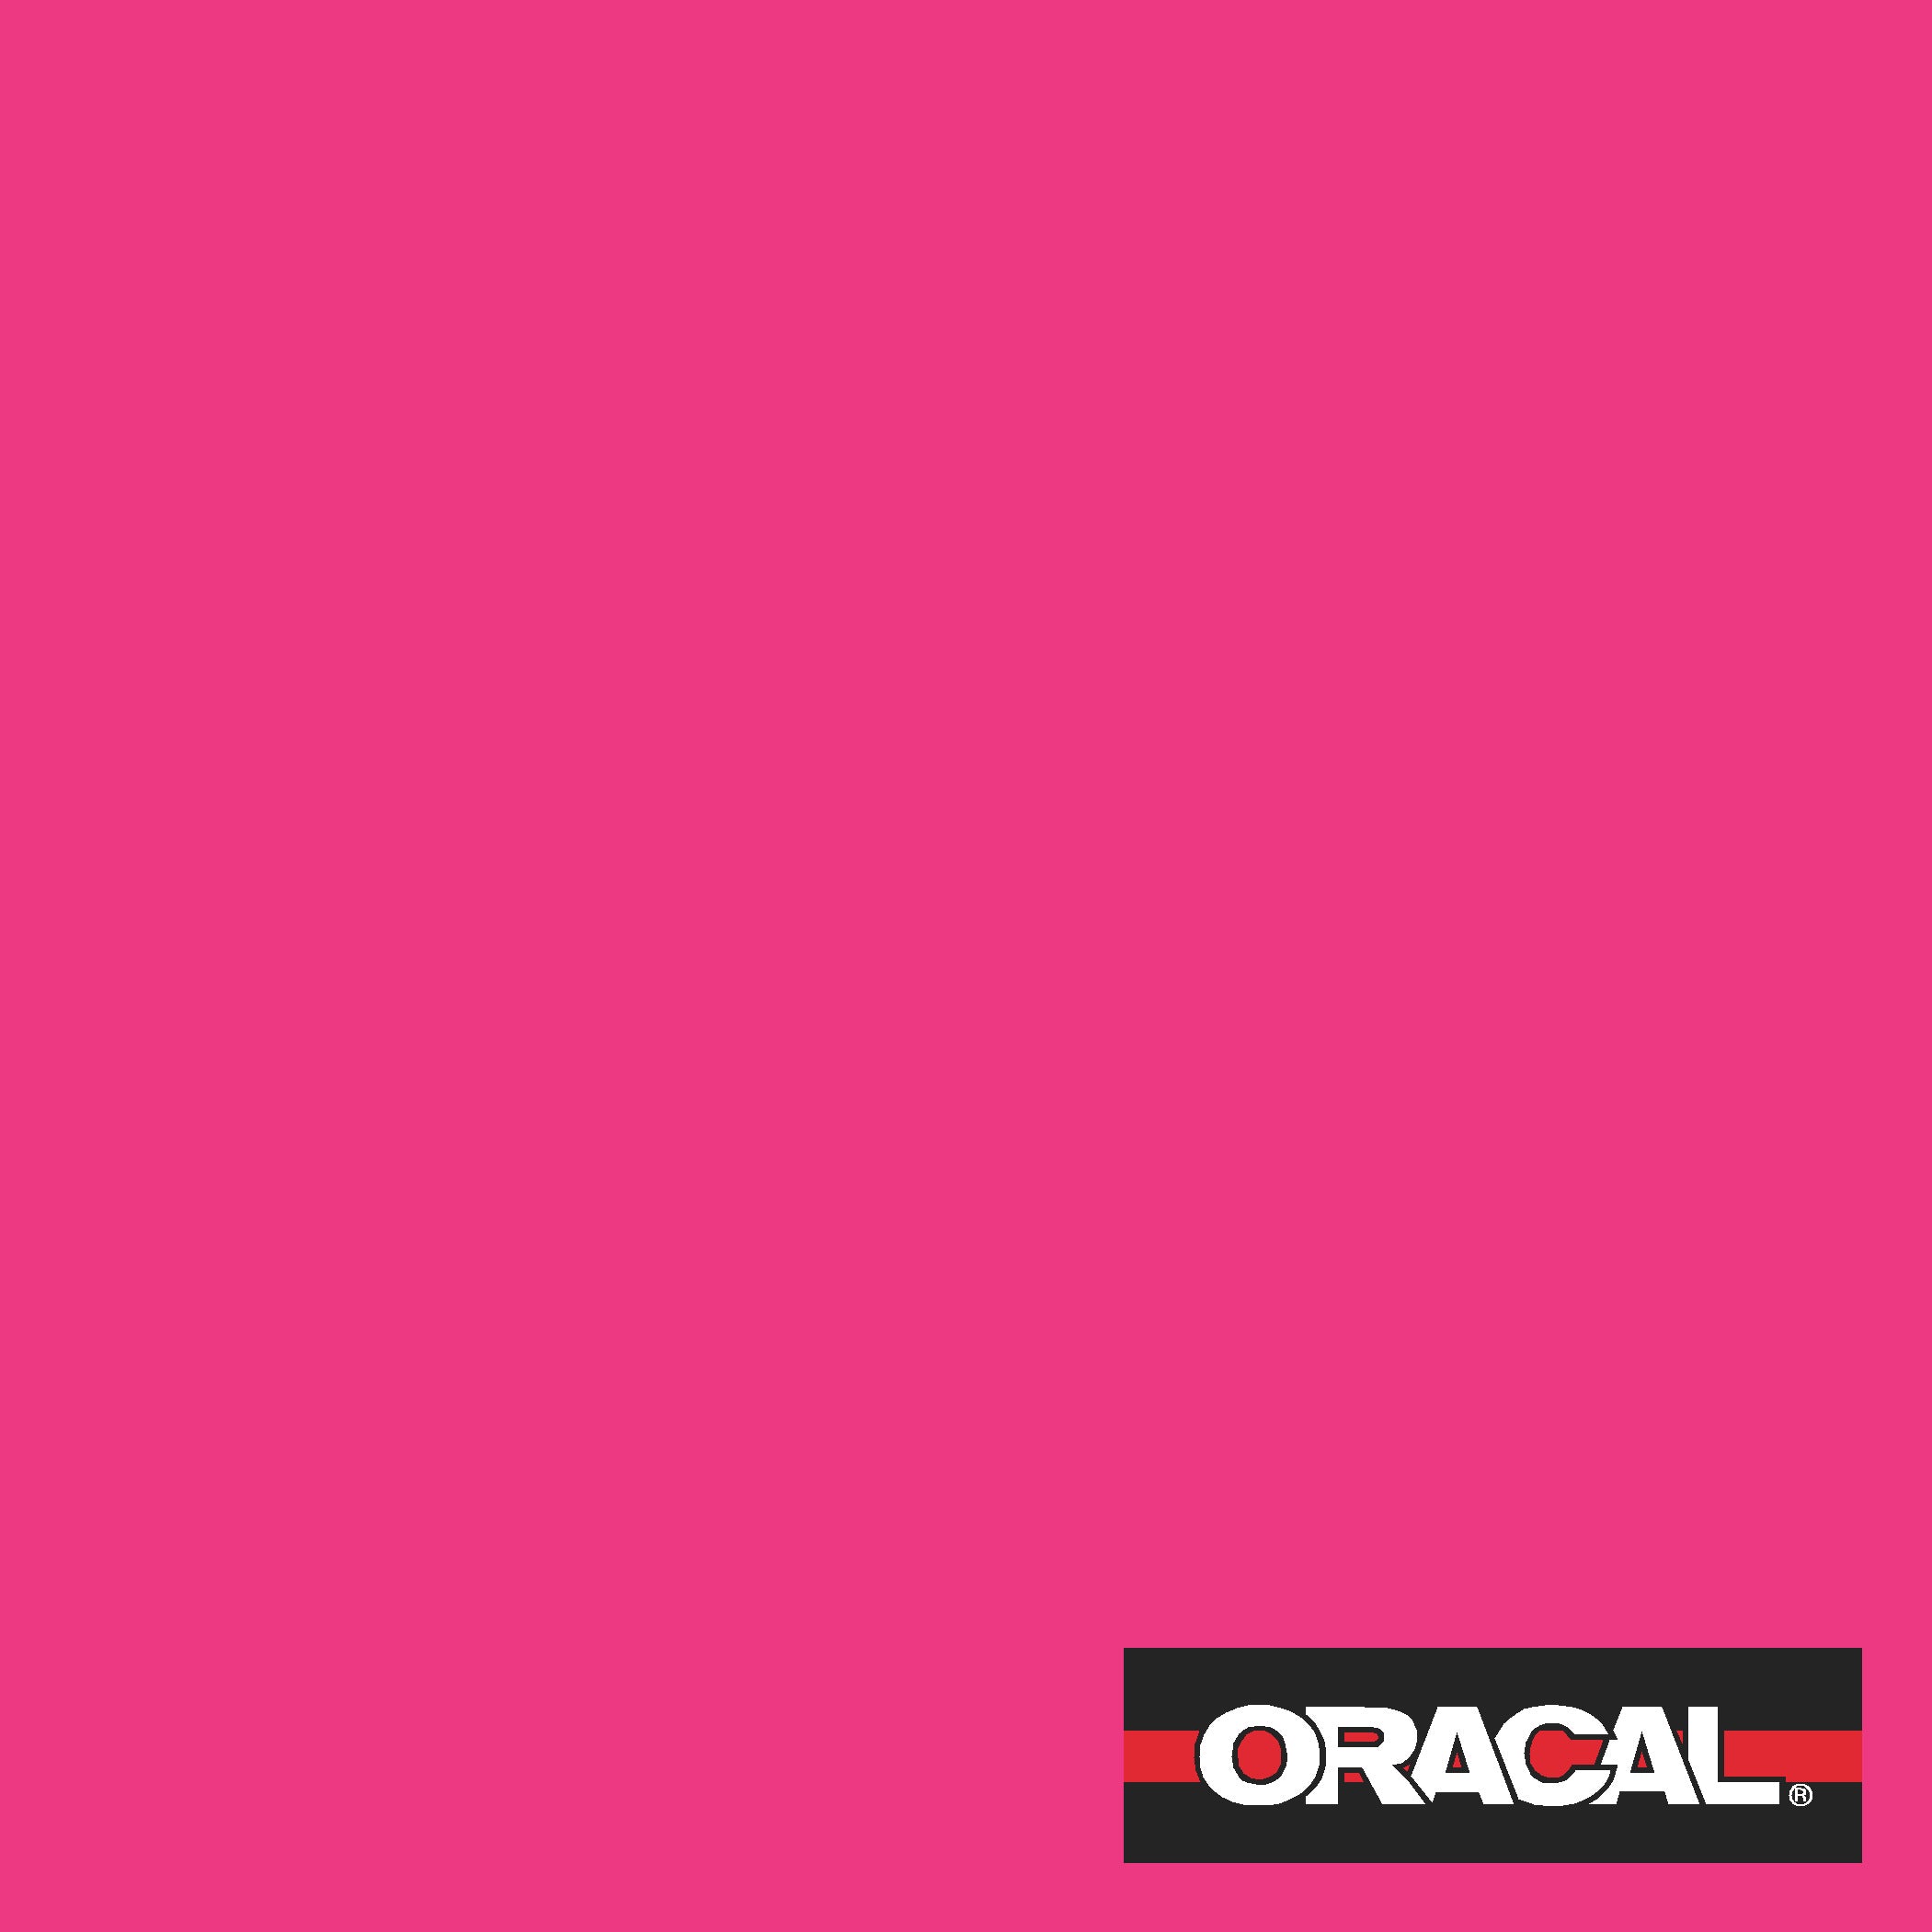 15 wide Oracal 651 Magenta 041 Pink vinyl by-the-foot - Vinyl Mayhem